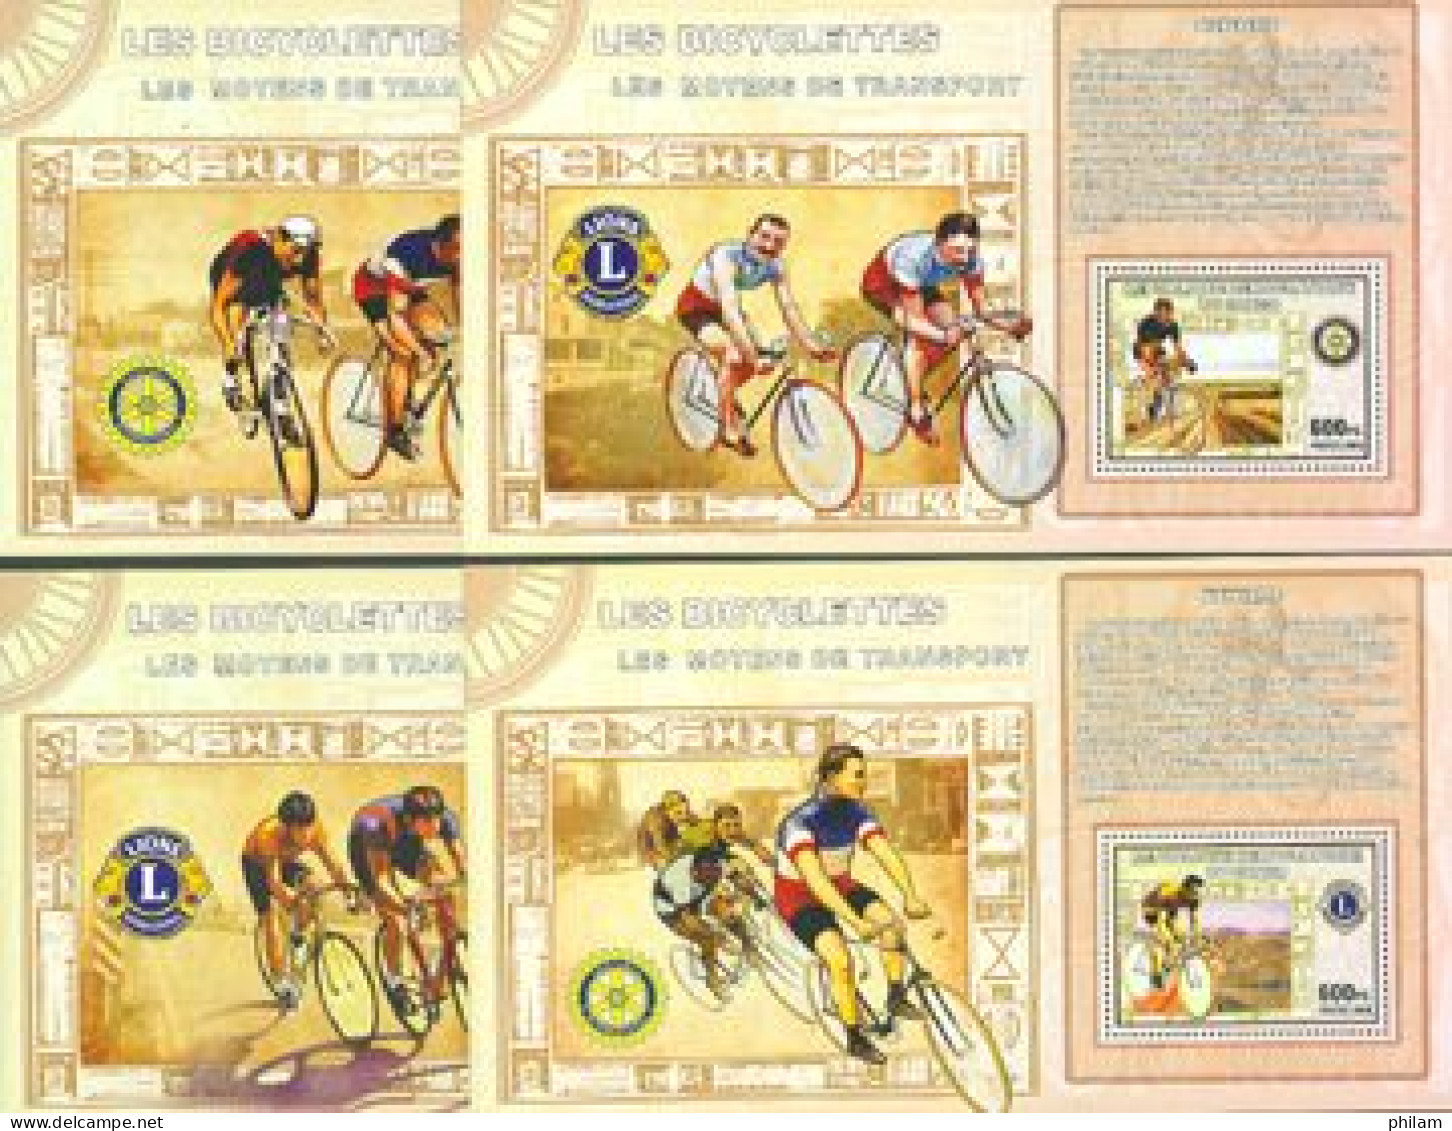 CONGO KINSHASA 2006 - Les Bicyclettes - Lions Club Et Rotary - 4 BF - Radsport